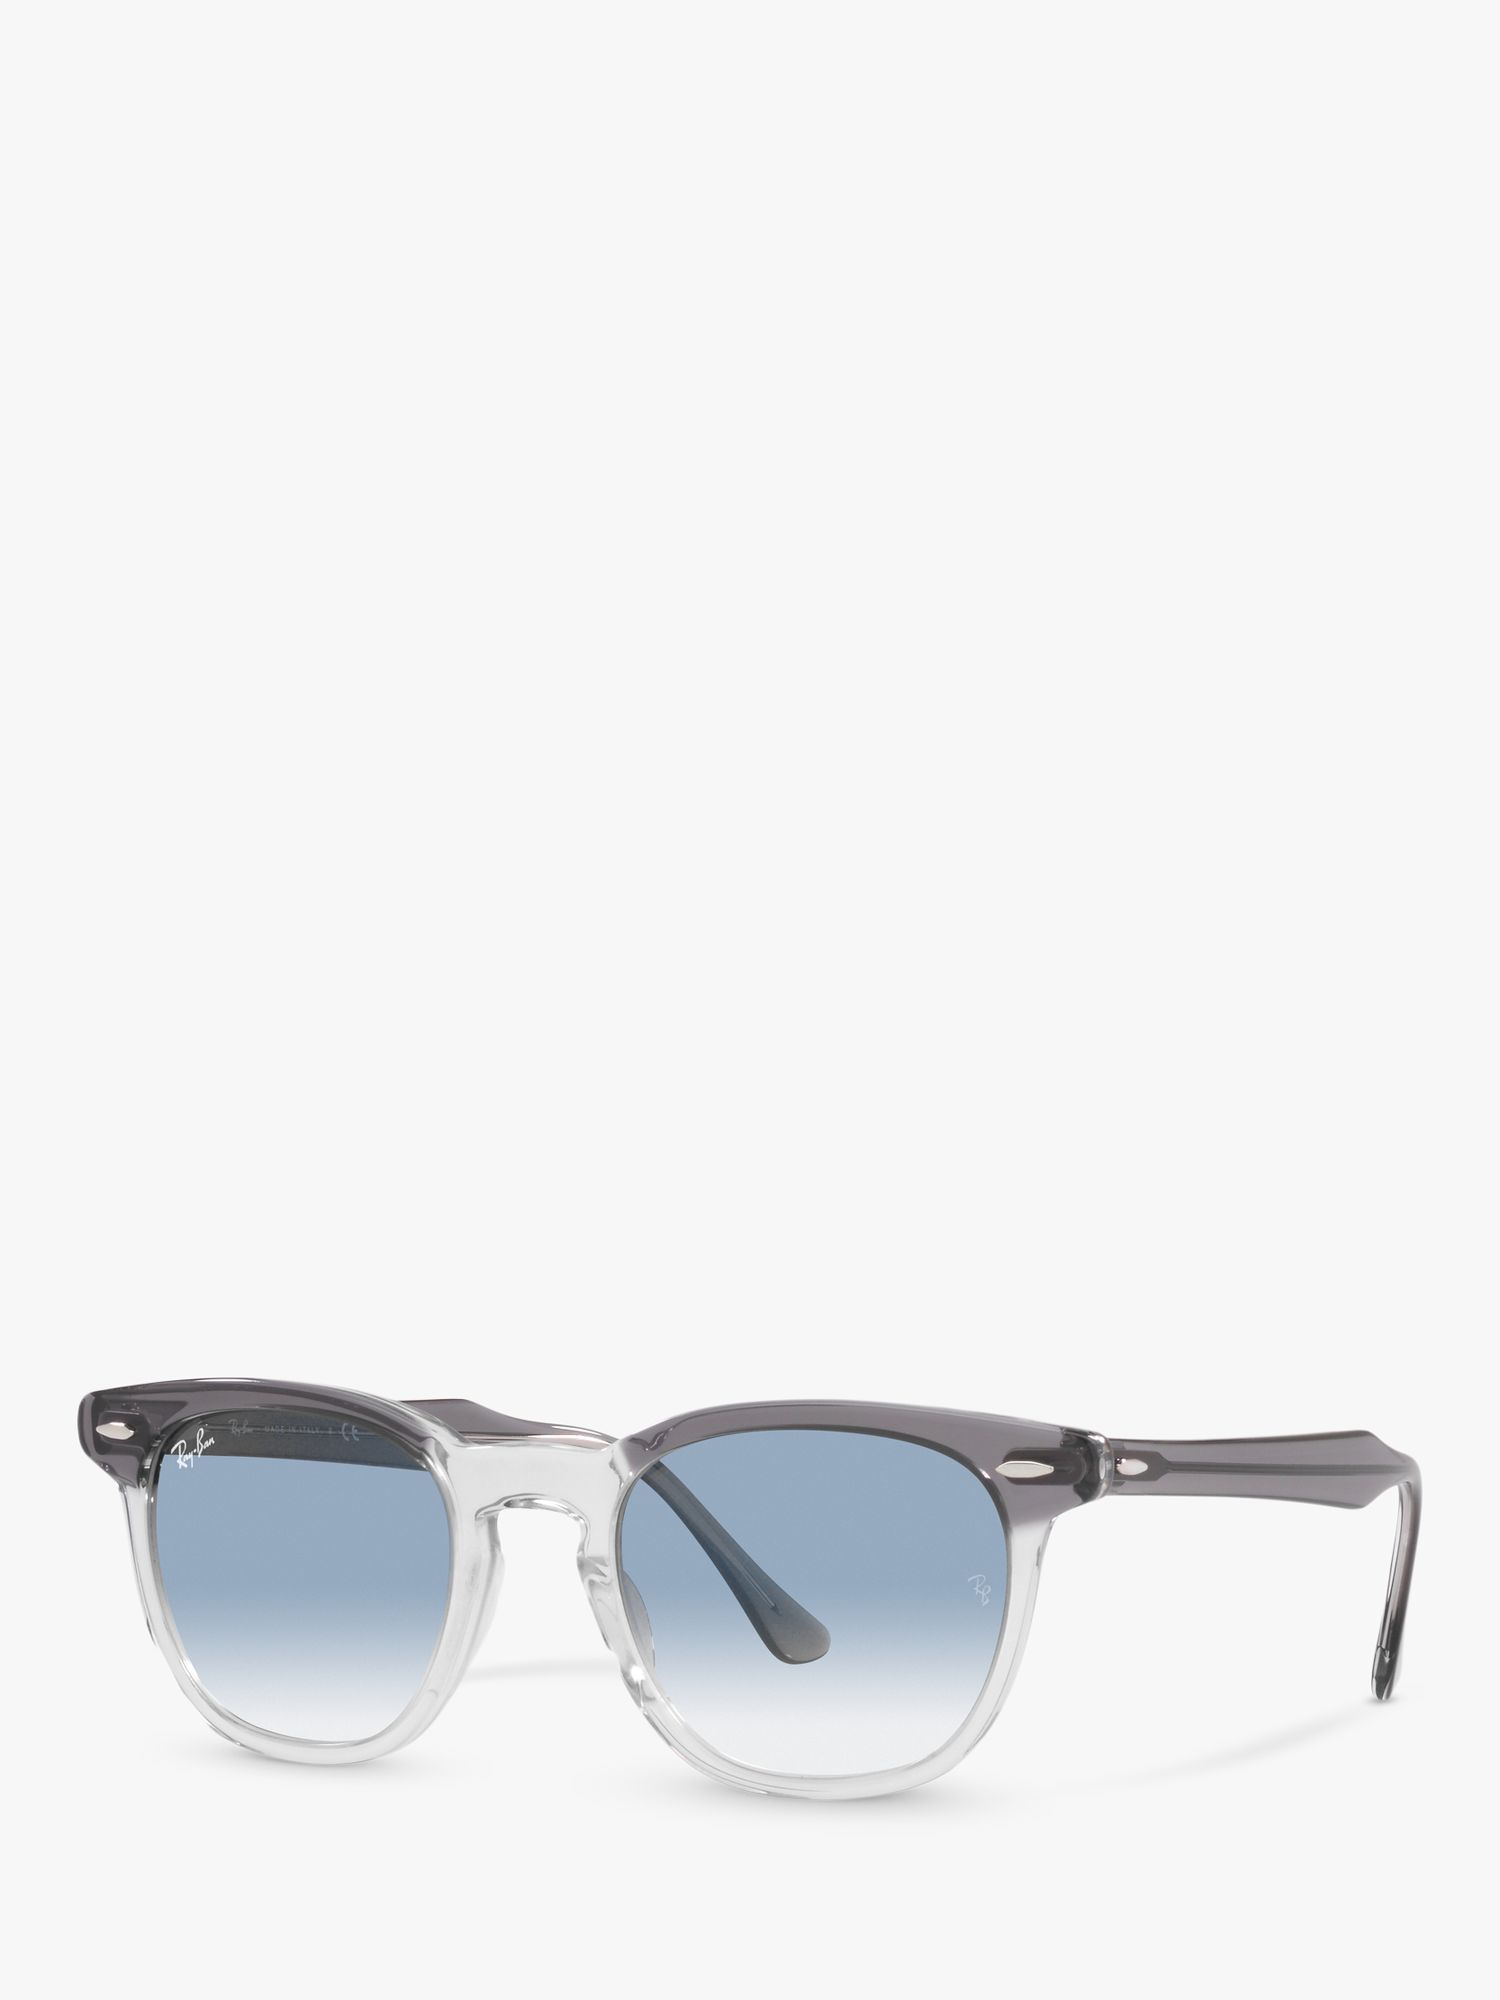 Солнцезащитные очки Ray-Ban RB2298 унисекс Hawkeye, прозрачный серый/синий